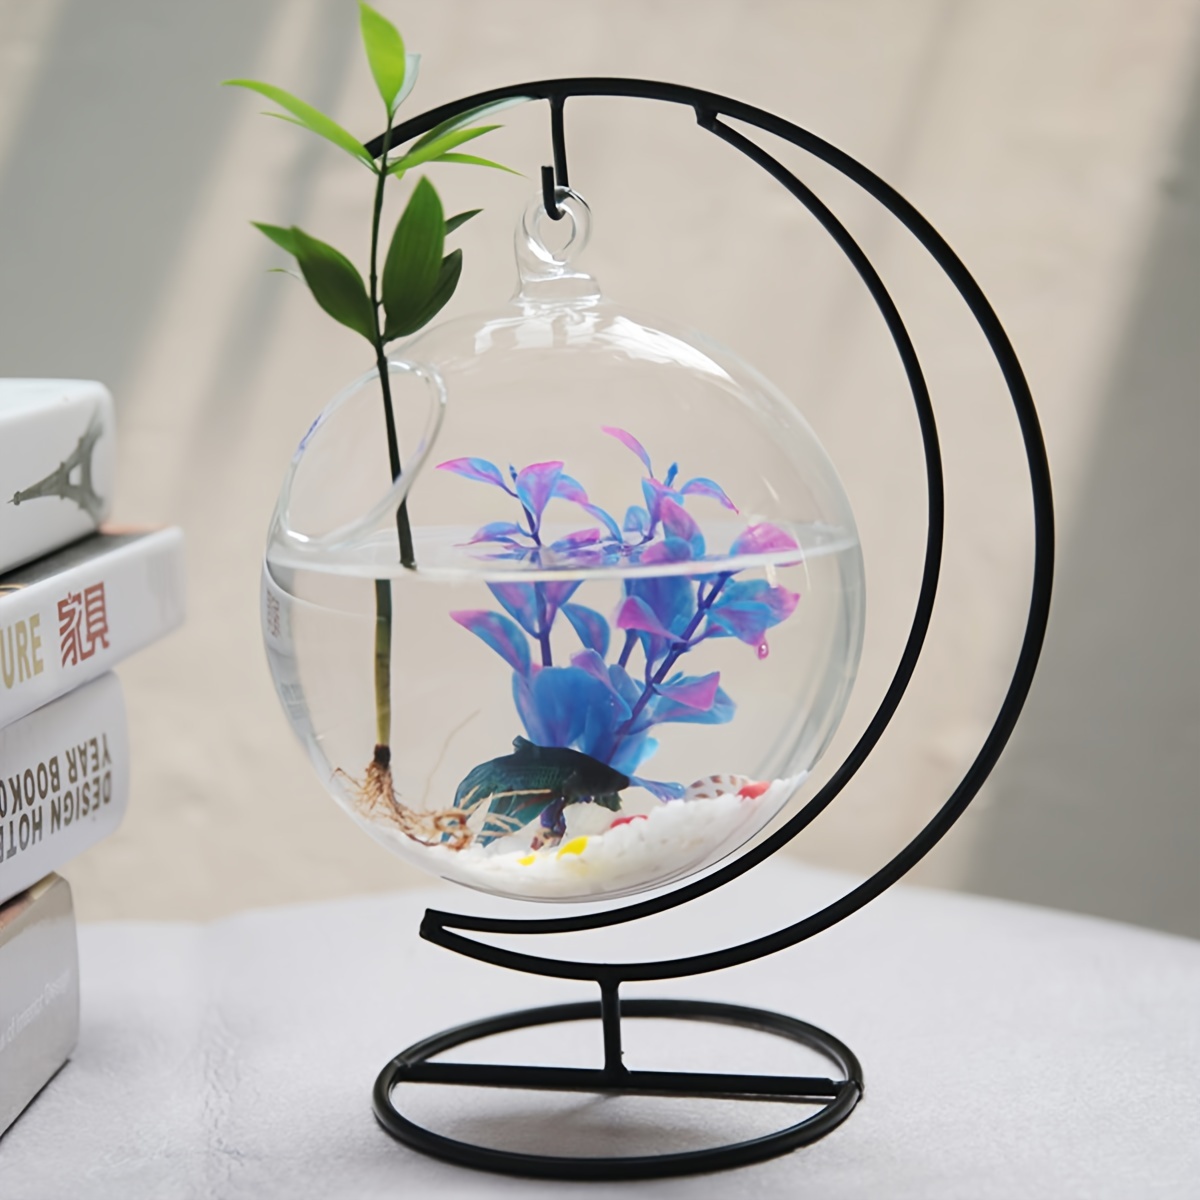 kekafu Desk Hanging Fish Tank Bowl with Stand Creative Glass Planter Vase  Holder Glass Ornament, Small Table Top Glass Fish Bowl Mini Aquarium for